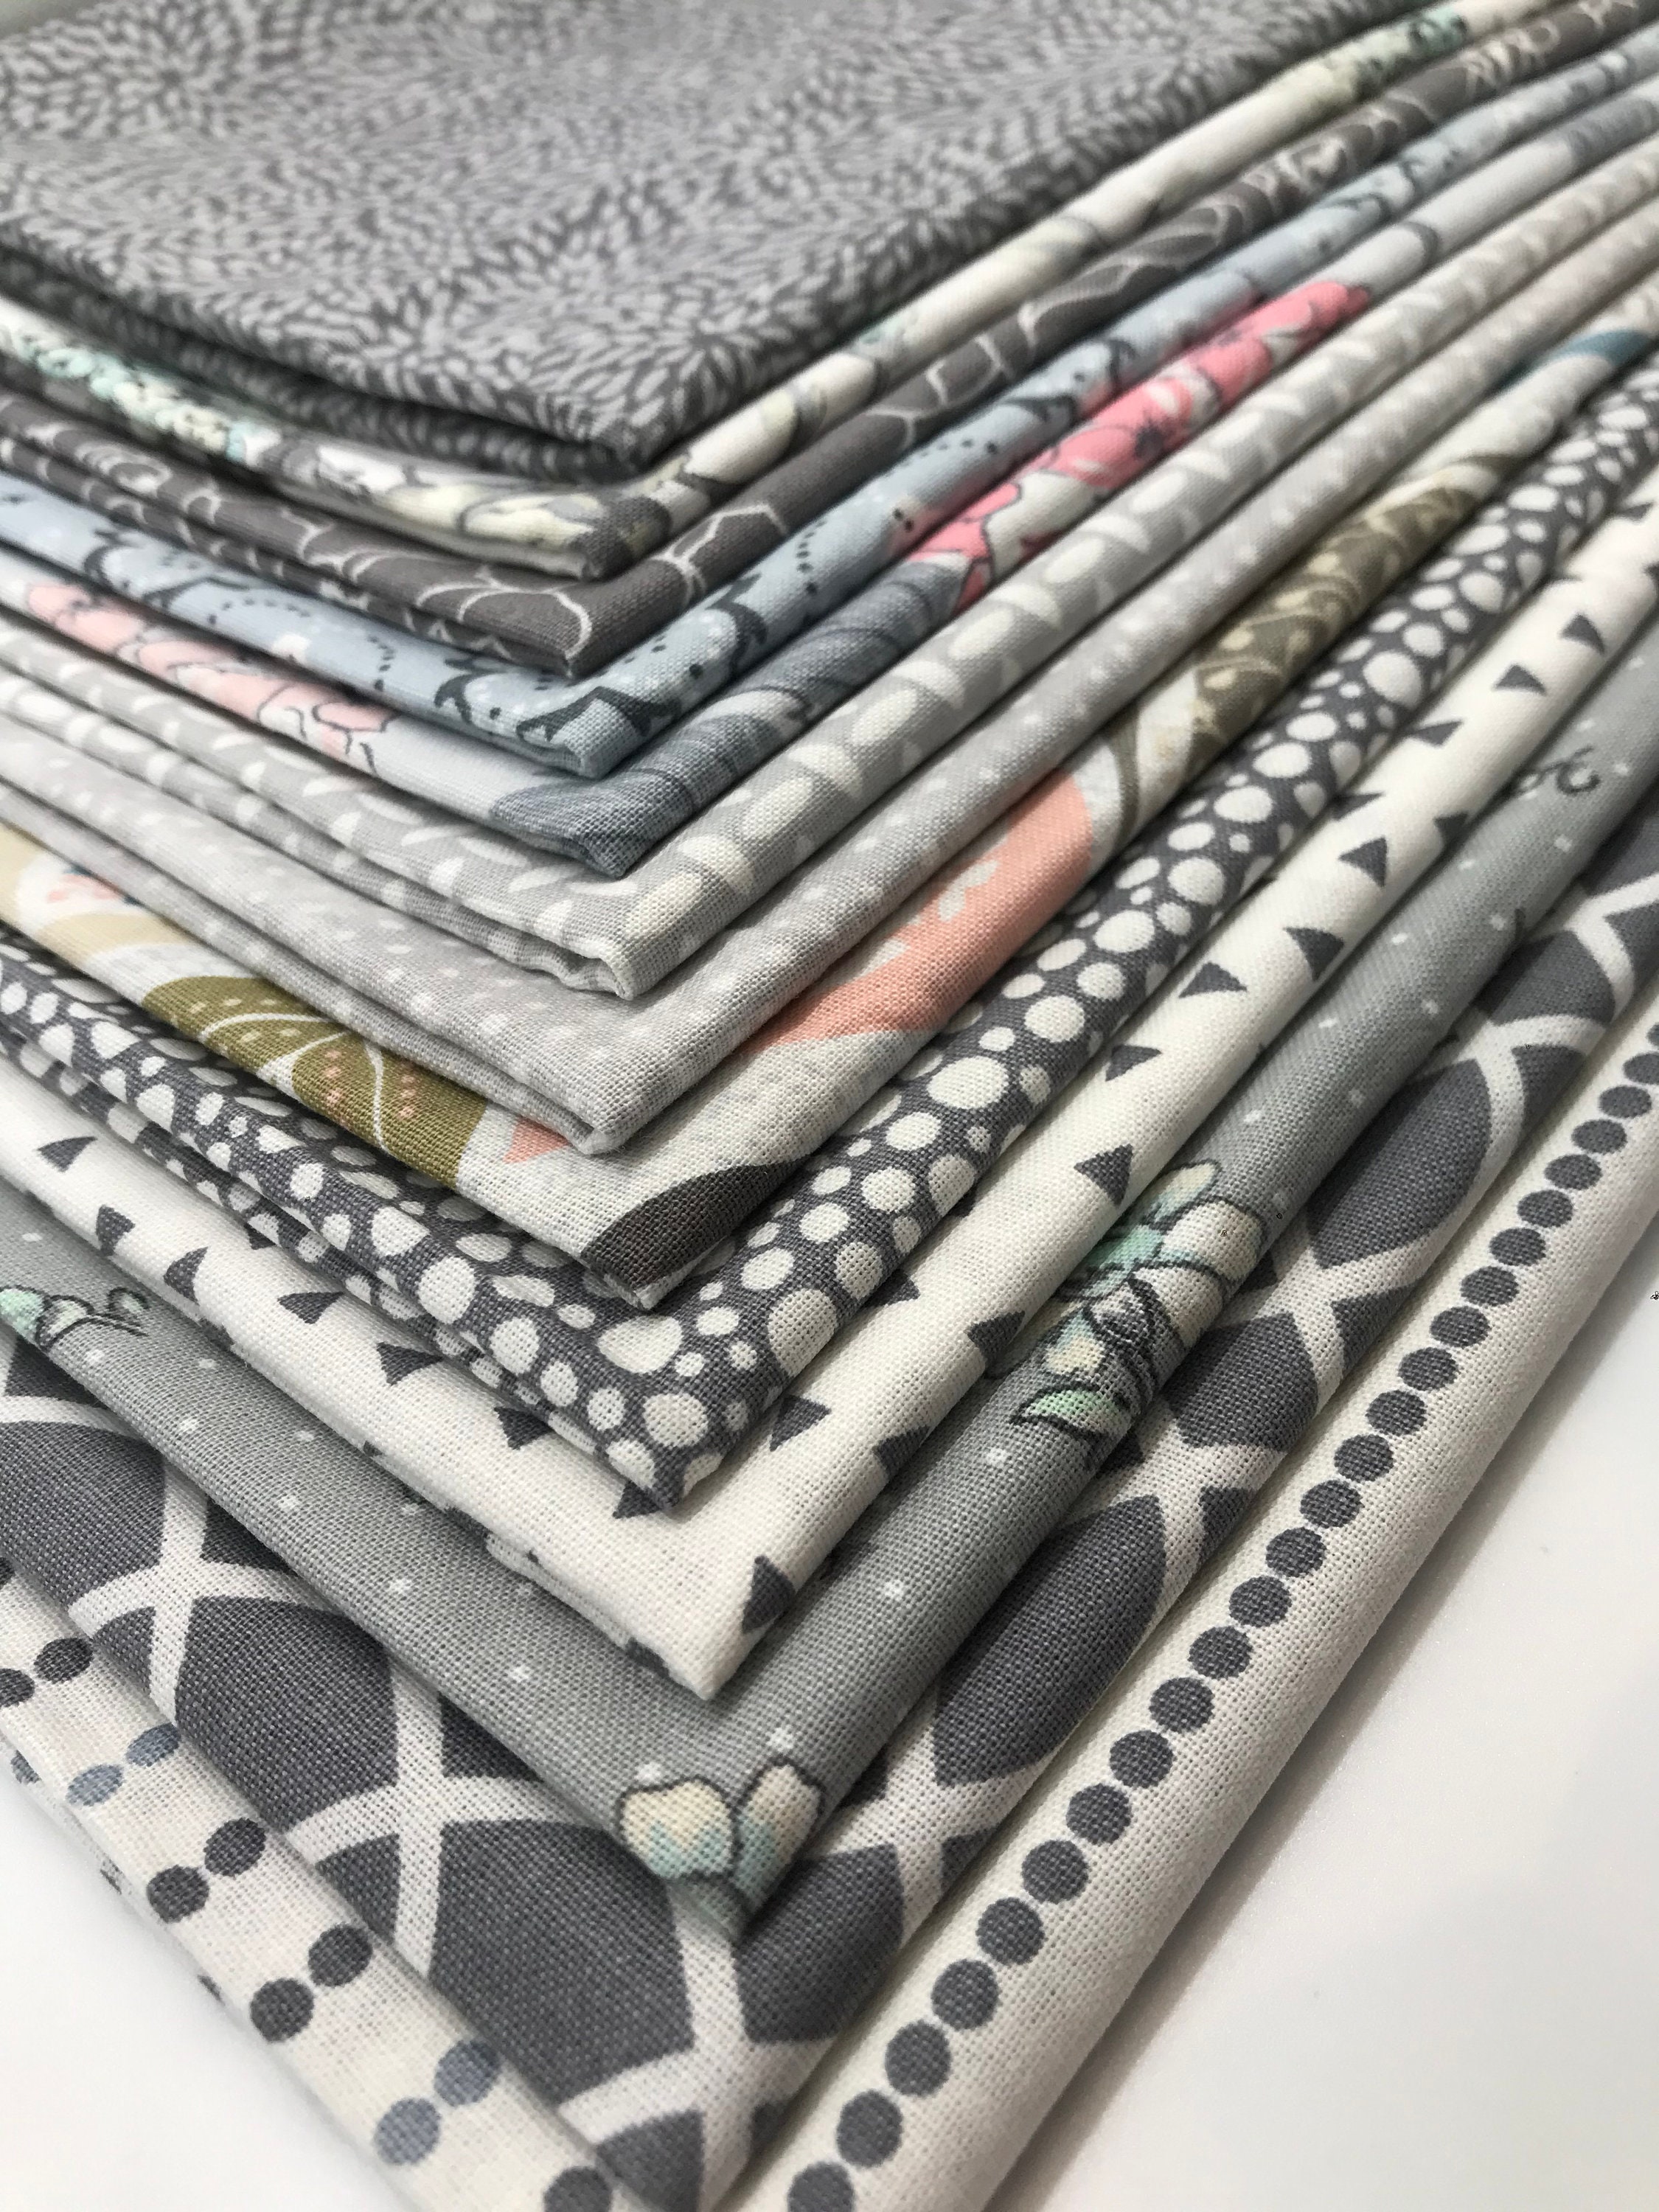 Fat Quarter Bundle of 13 Beautiful Gray Tone Premium Cotton Fabric for  Projects, Face Masks, Apparel Etc. 